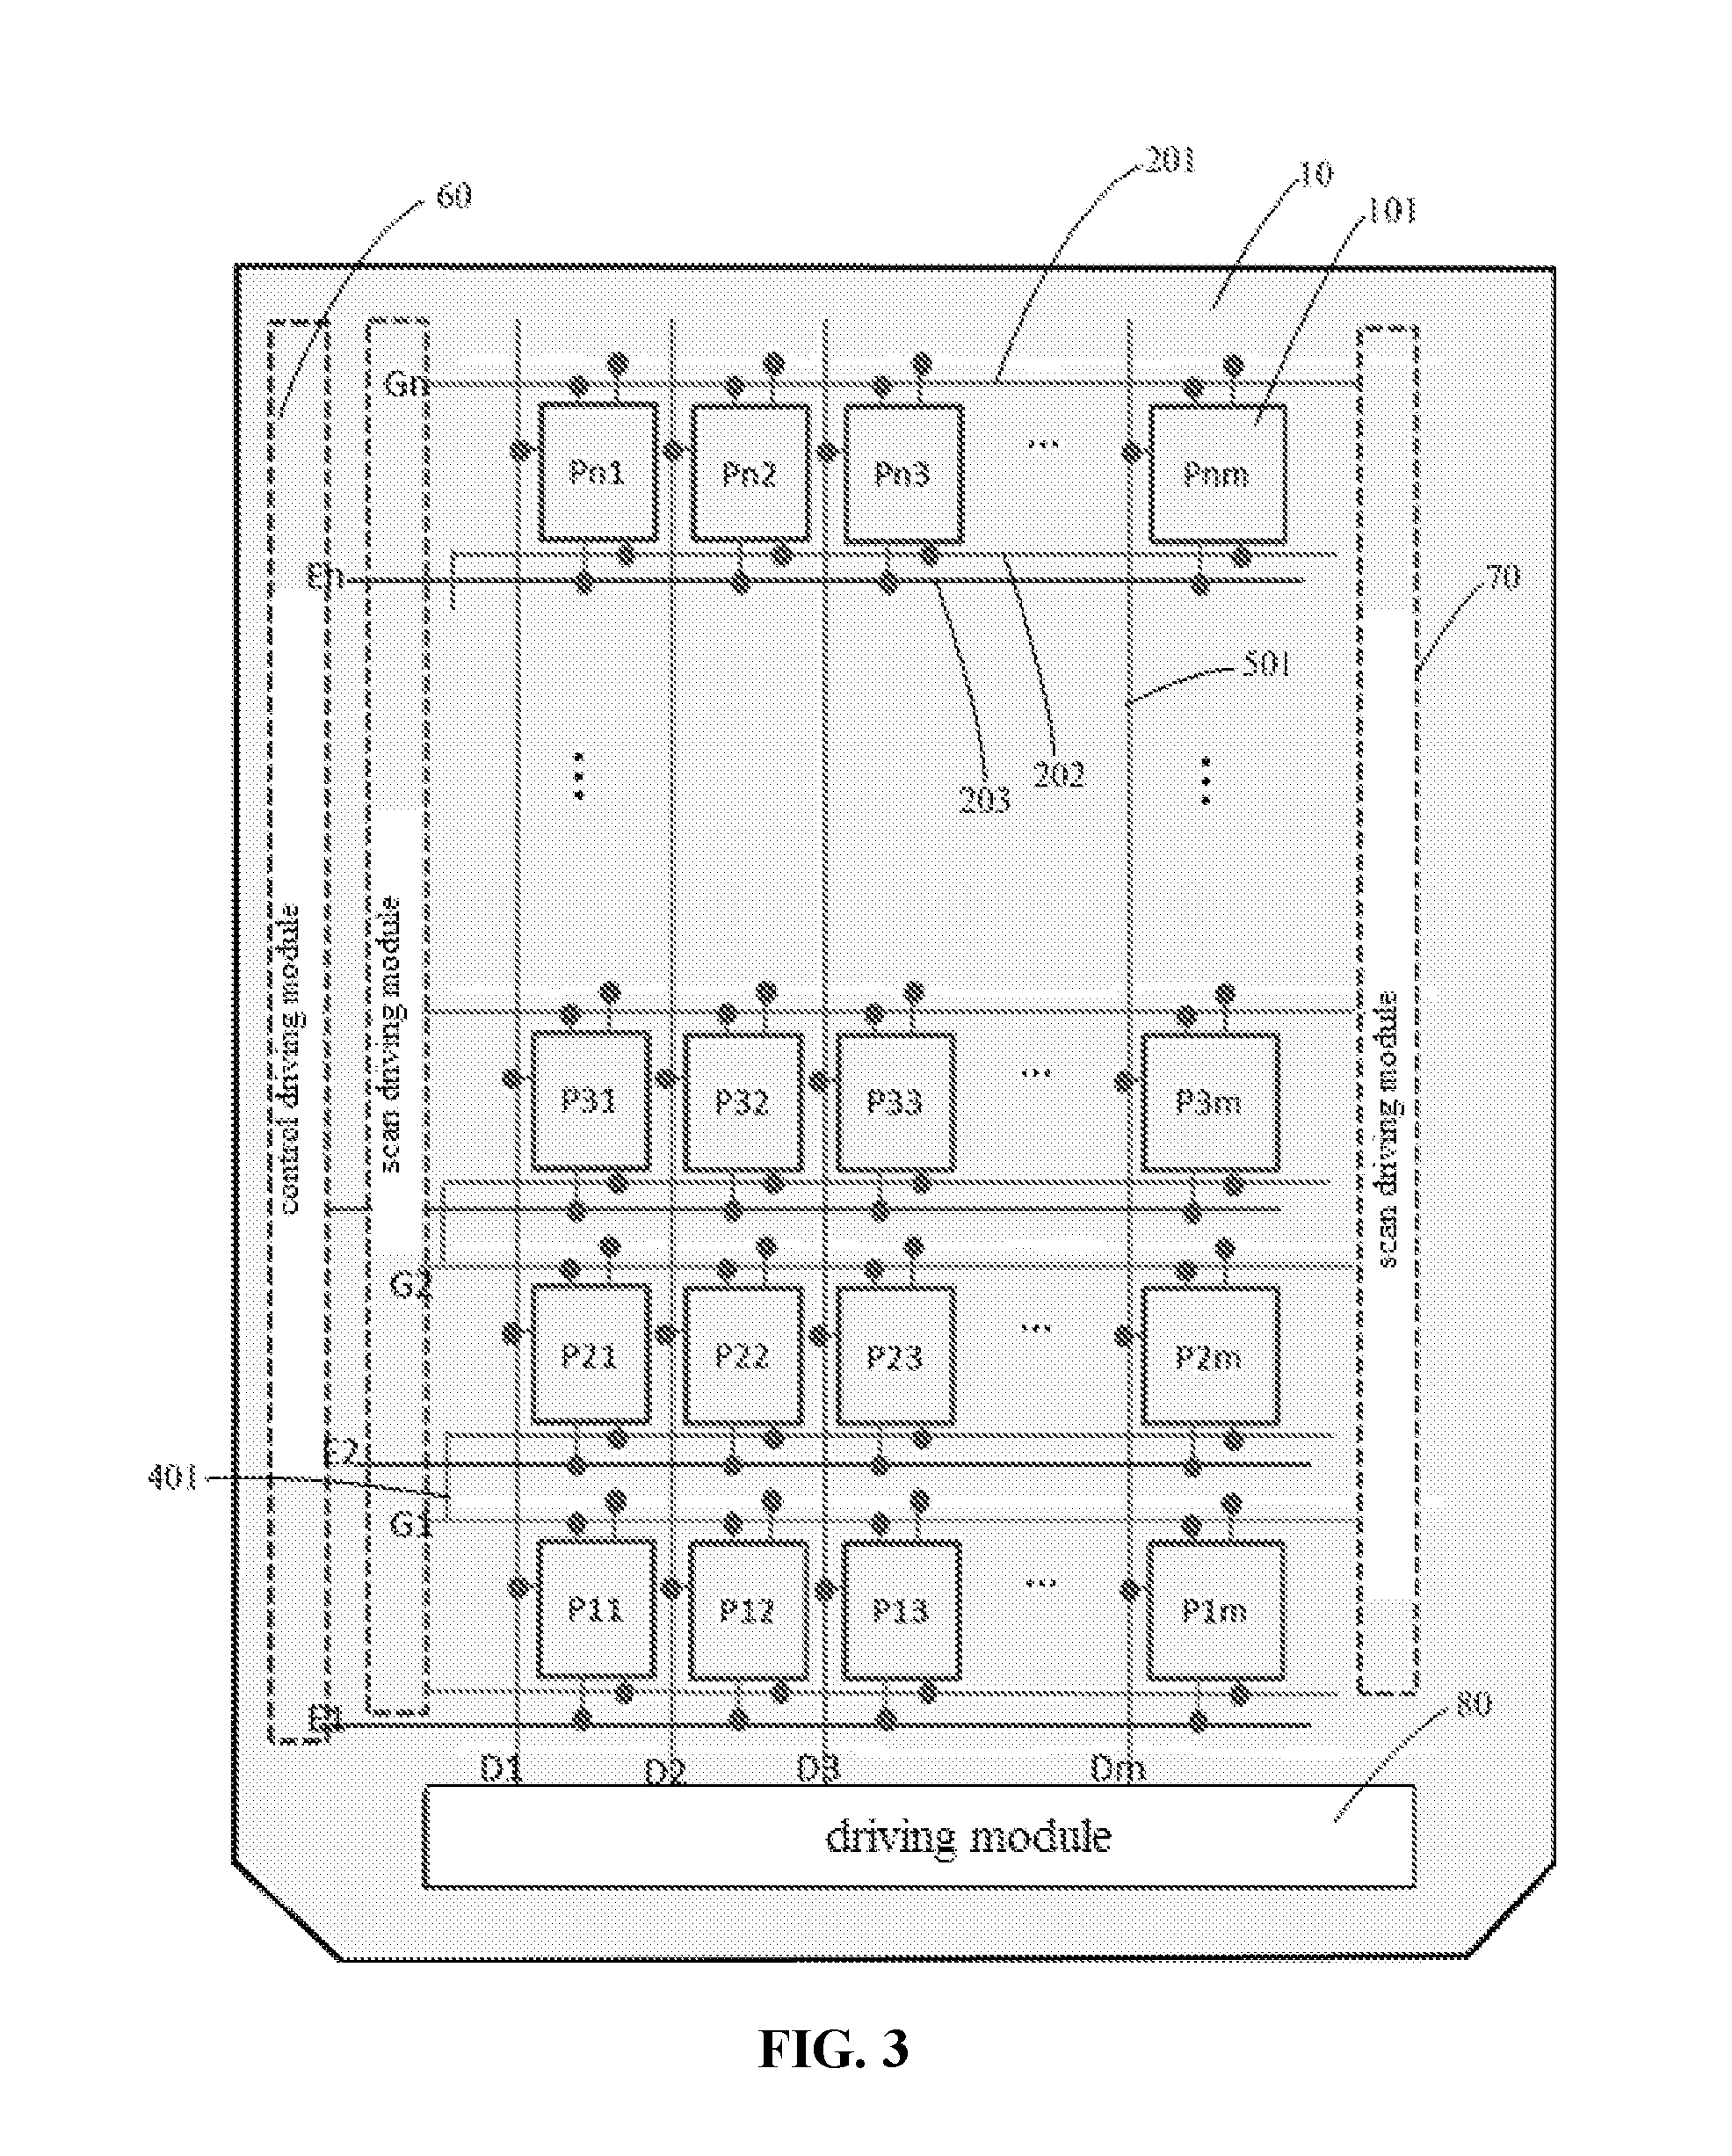 Pixel structure